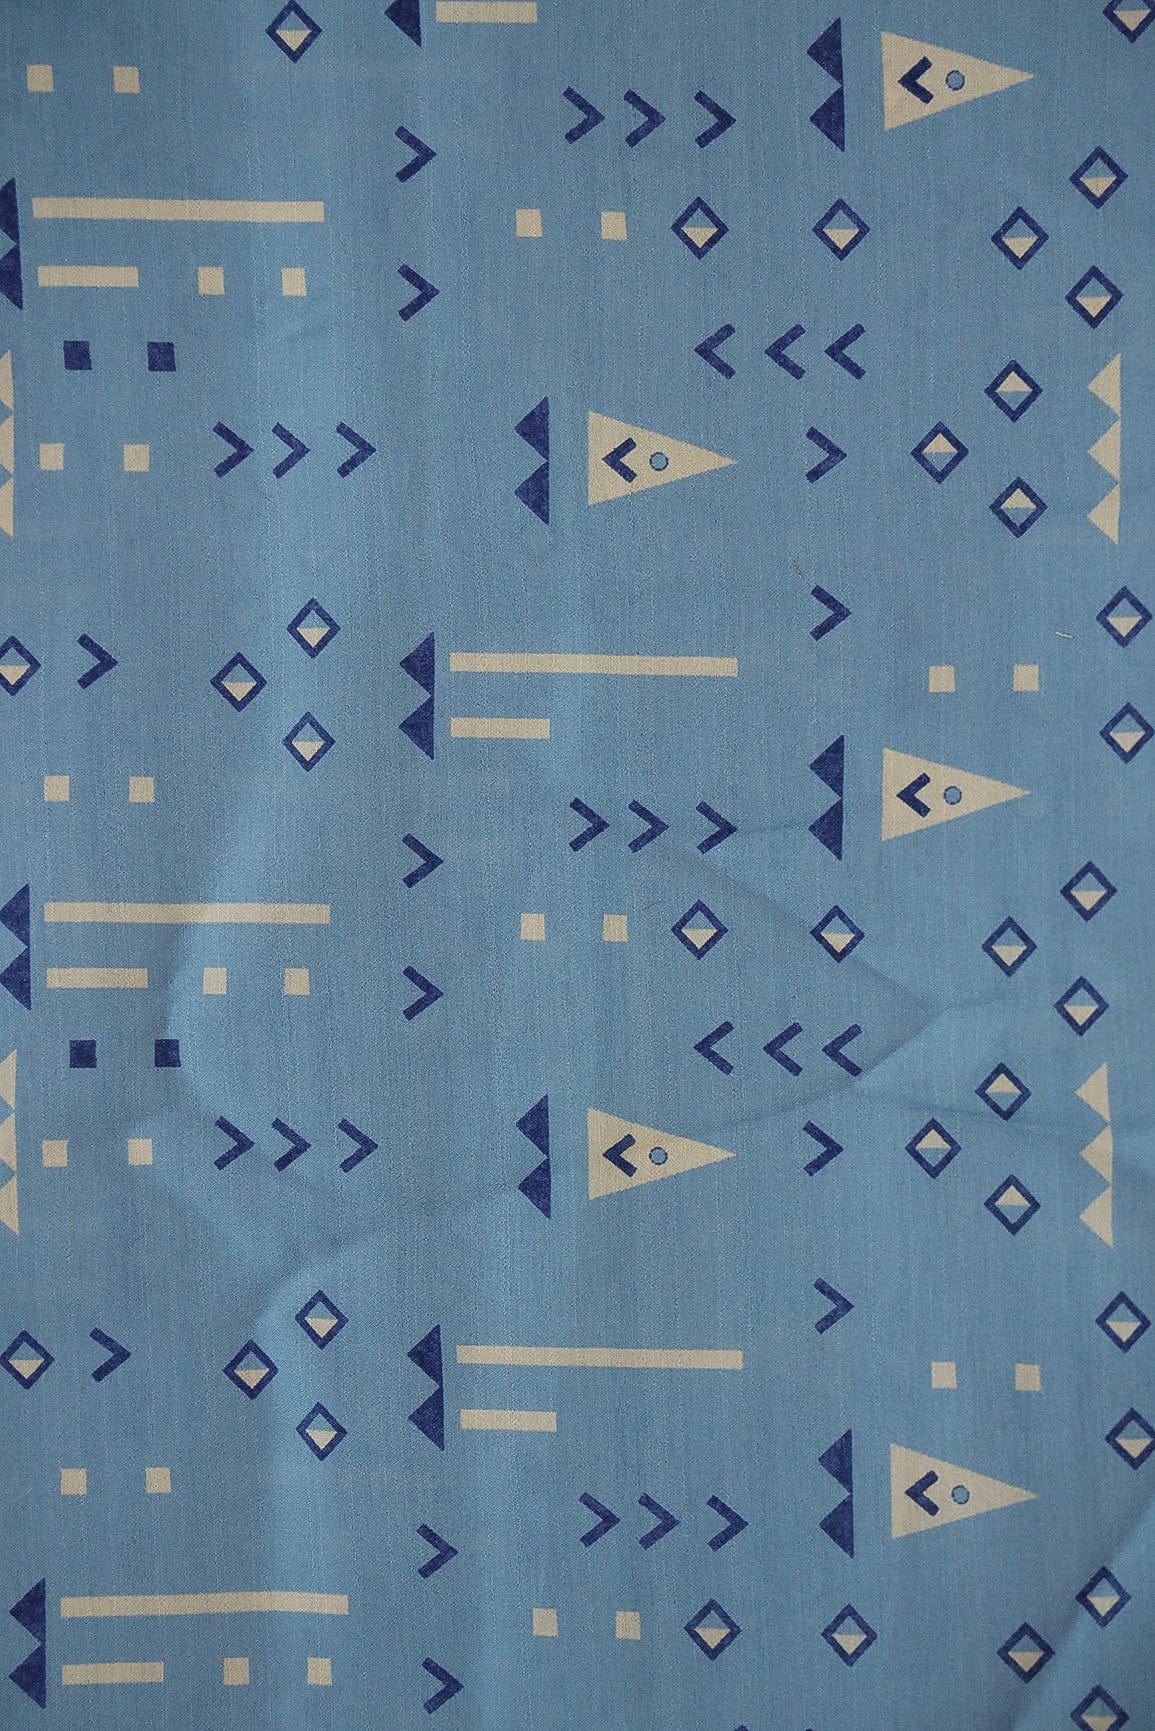 doeraa Prints Sky Blue Geometric Digital Print on Tussar Satin Fabric